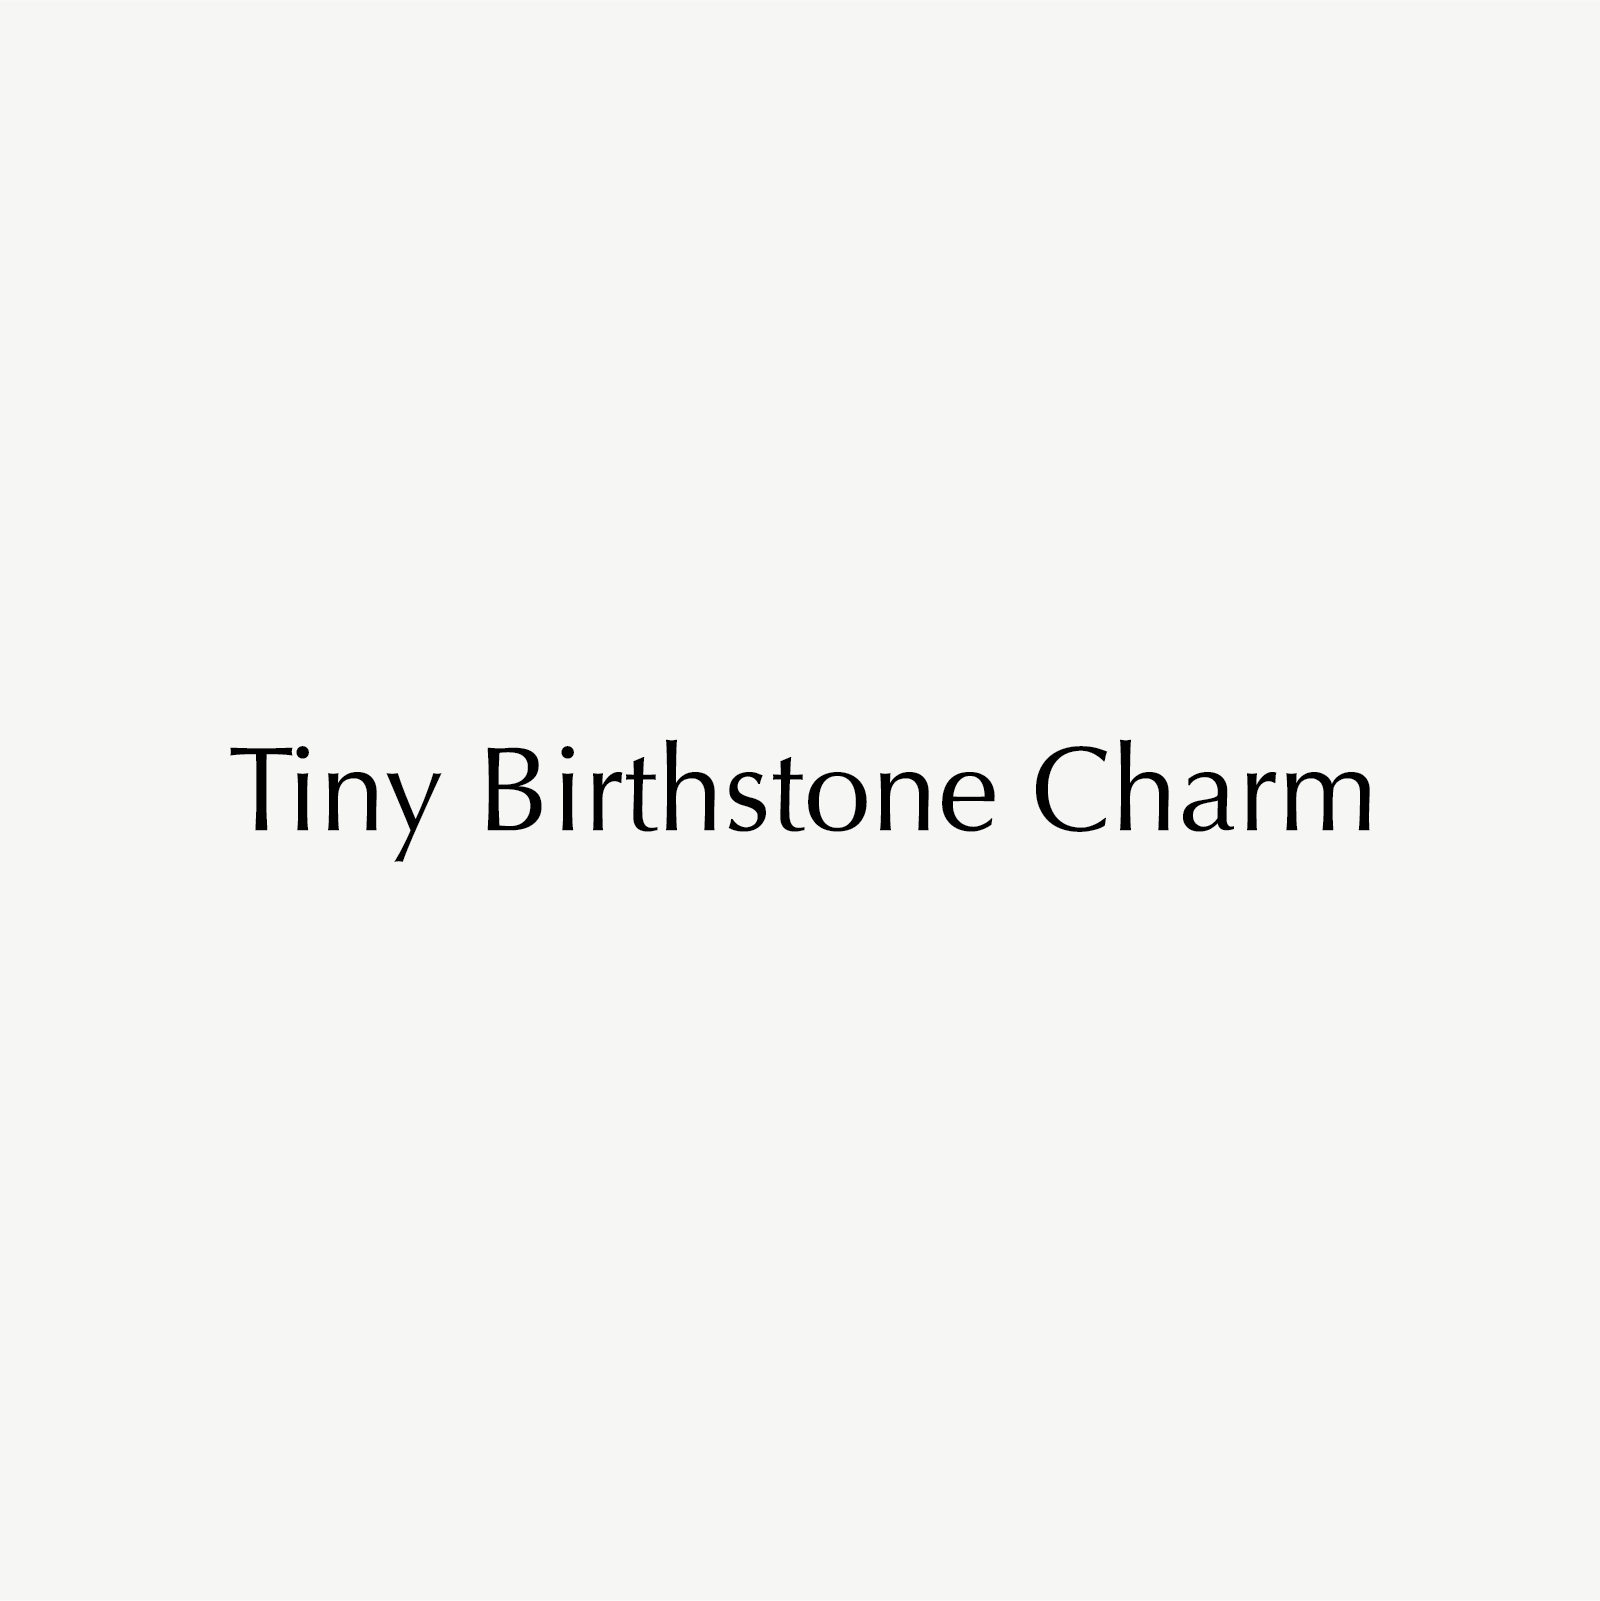 Tiny Birthstone Charm